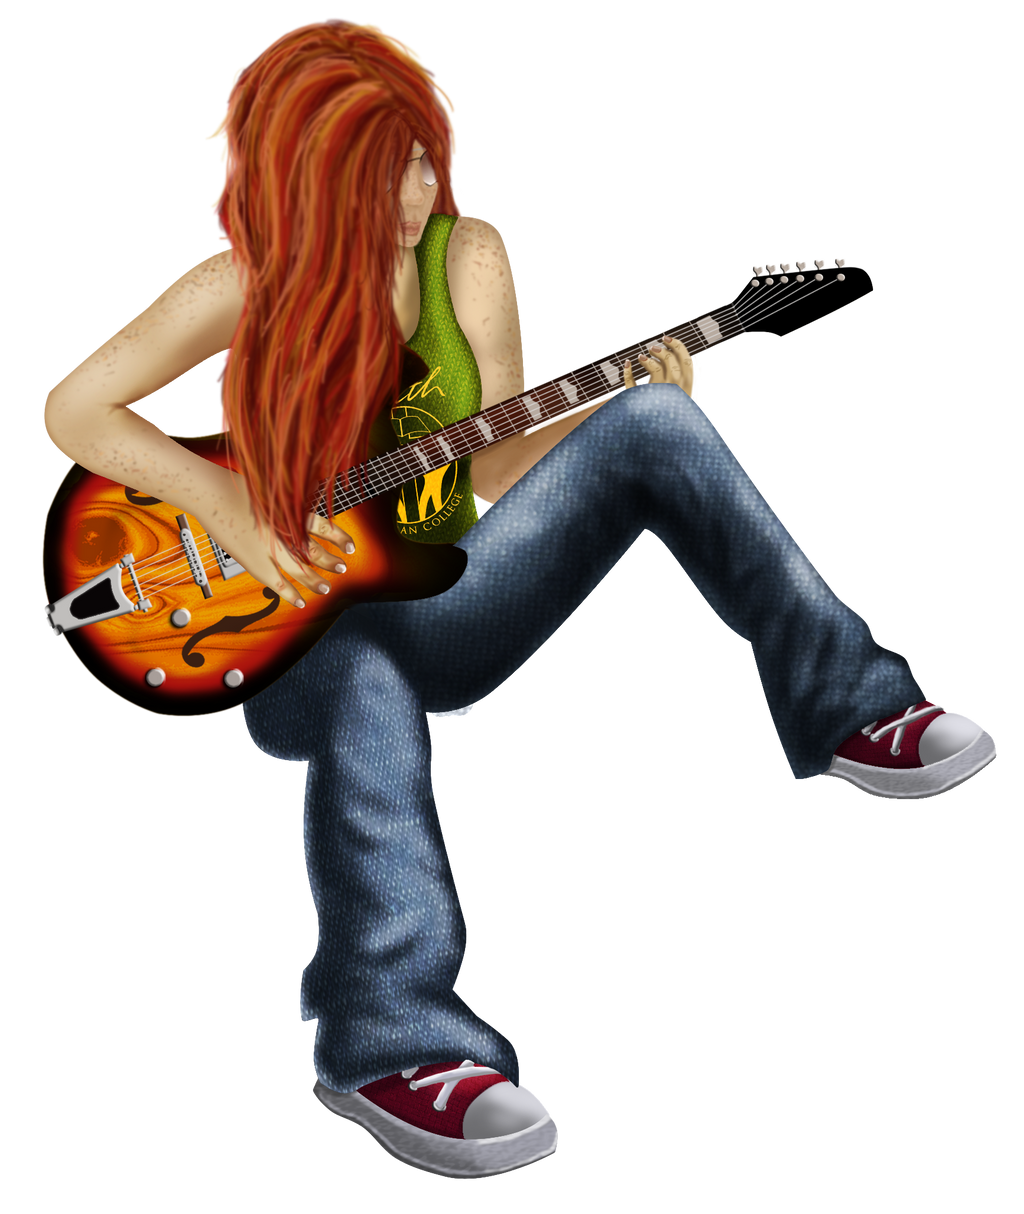 Guitar Girl Anime Free Transparent Image HQ PNG Image